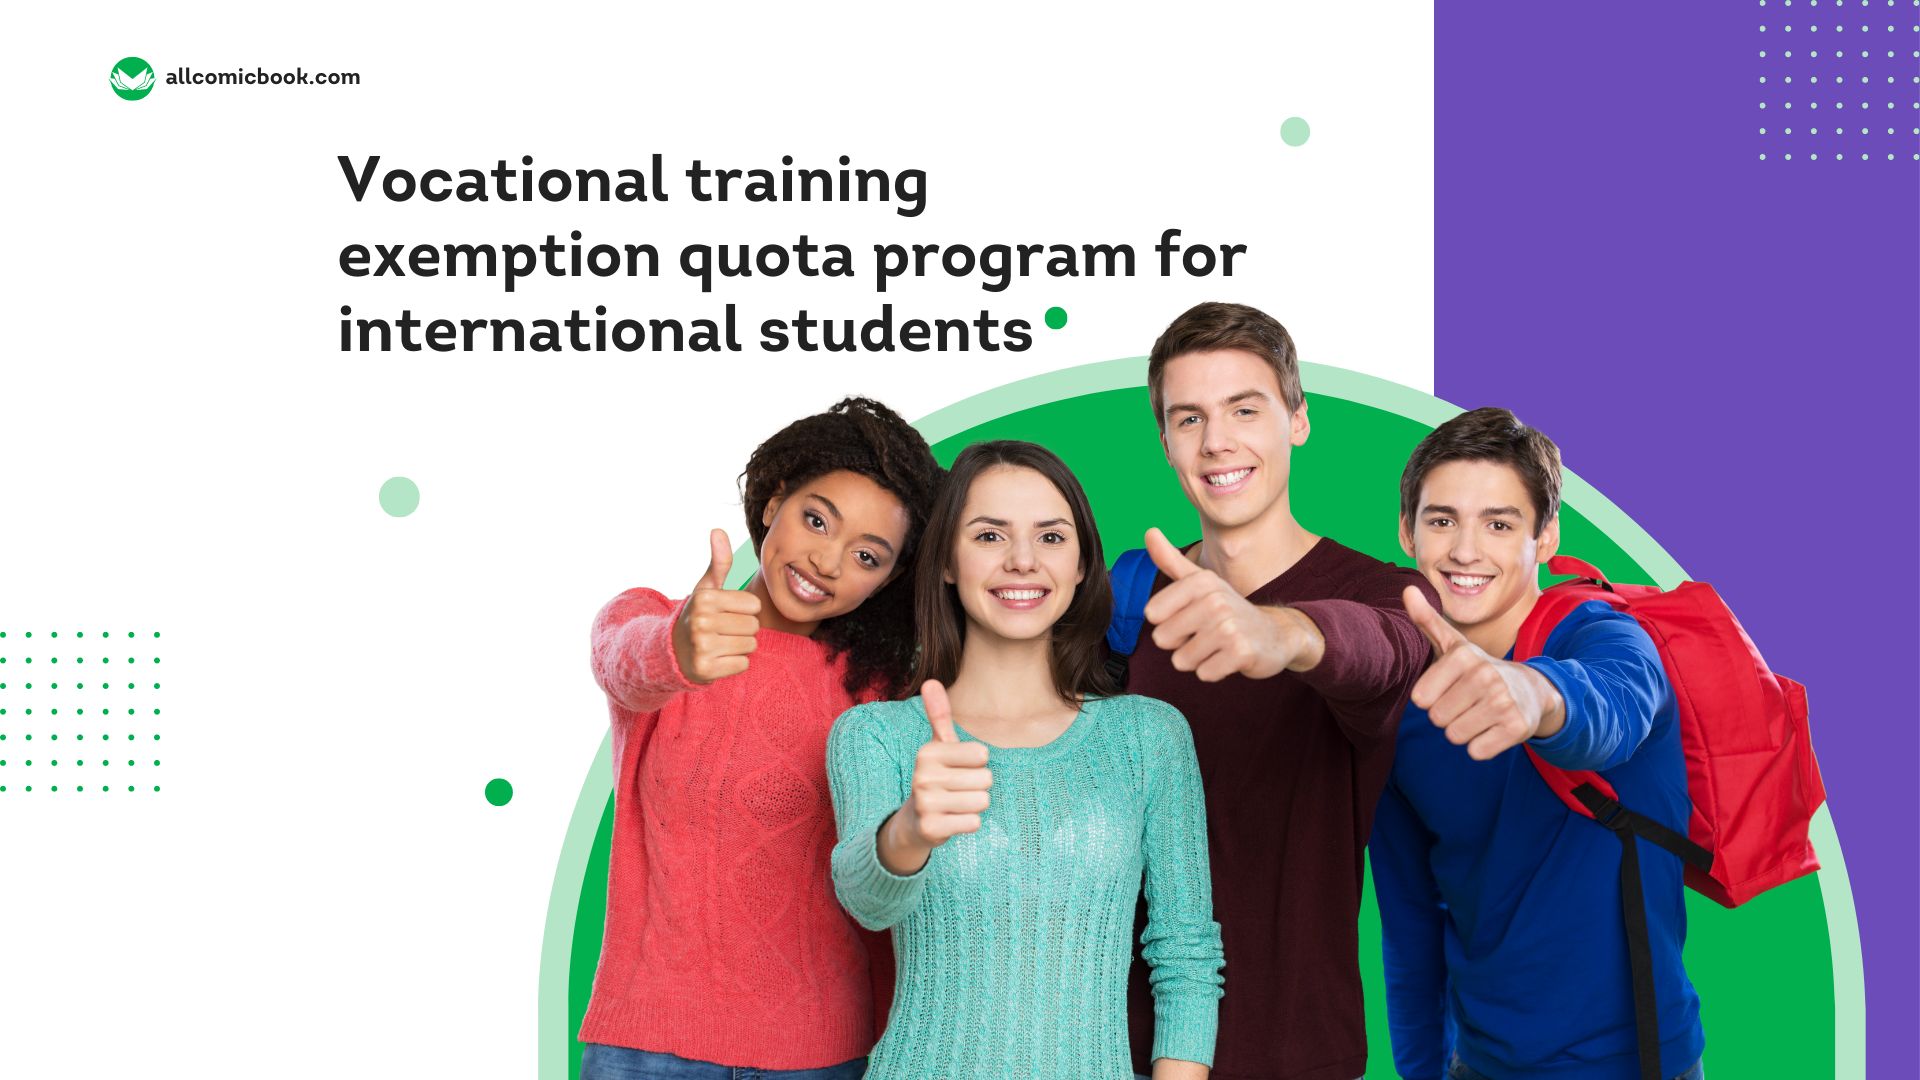 Vocational training exemption quota program for international students